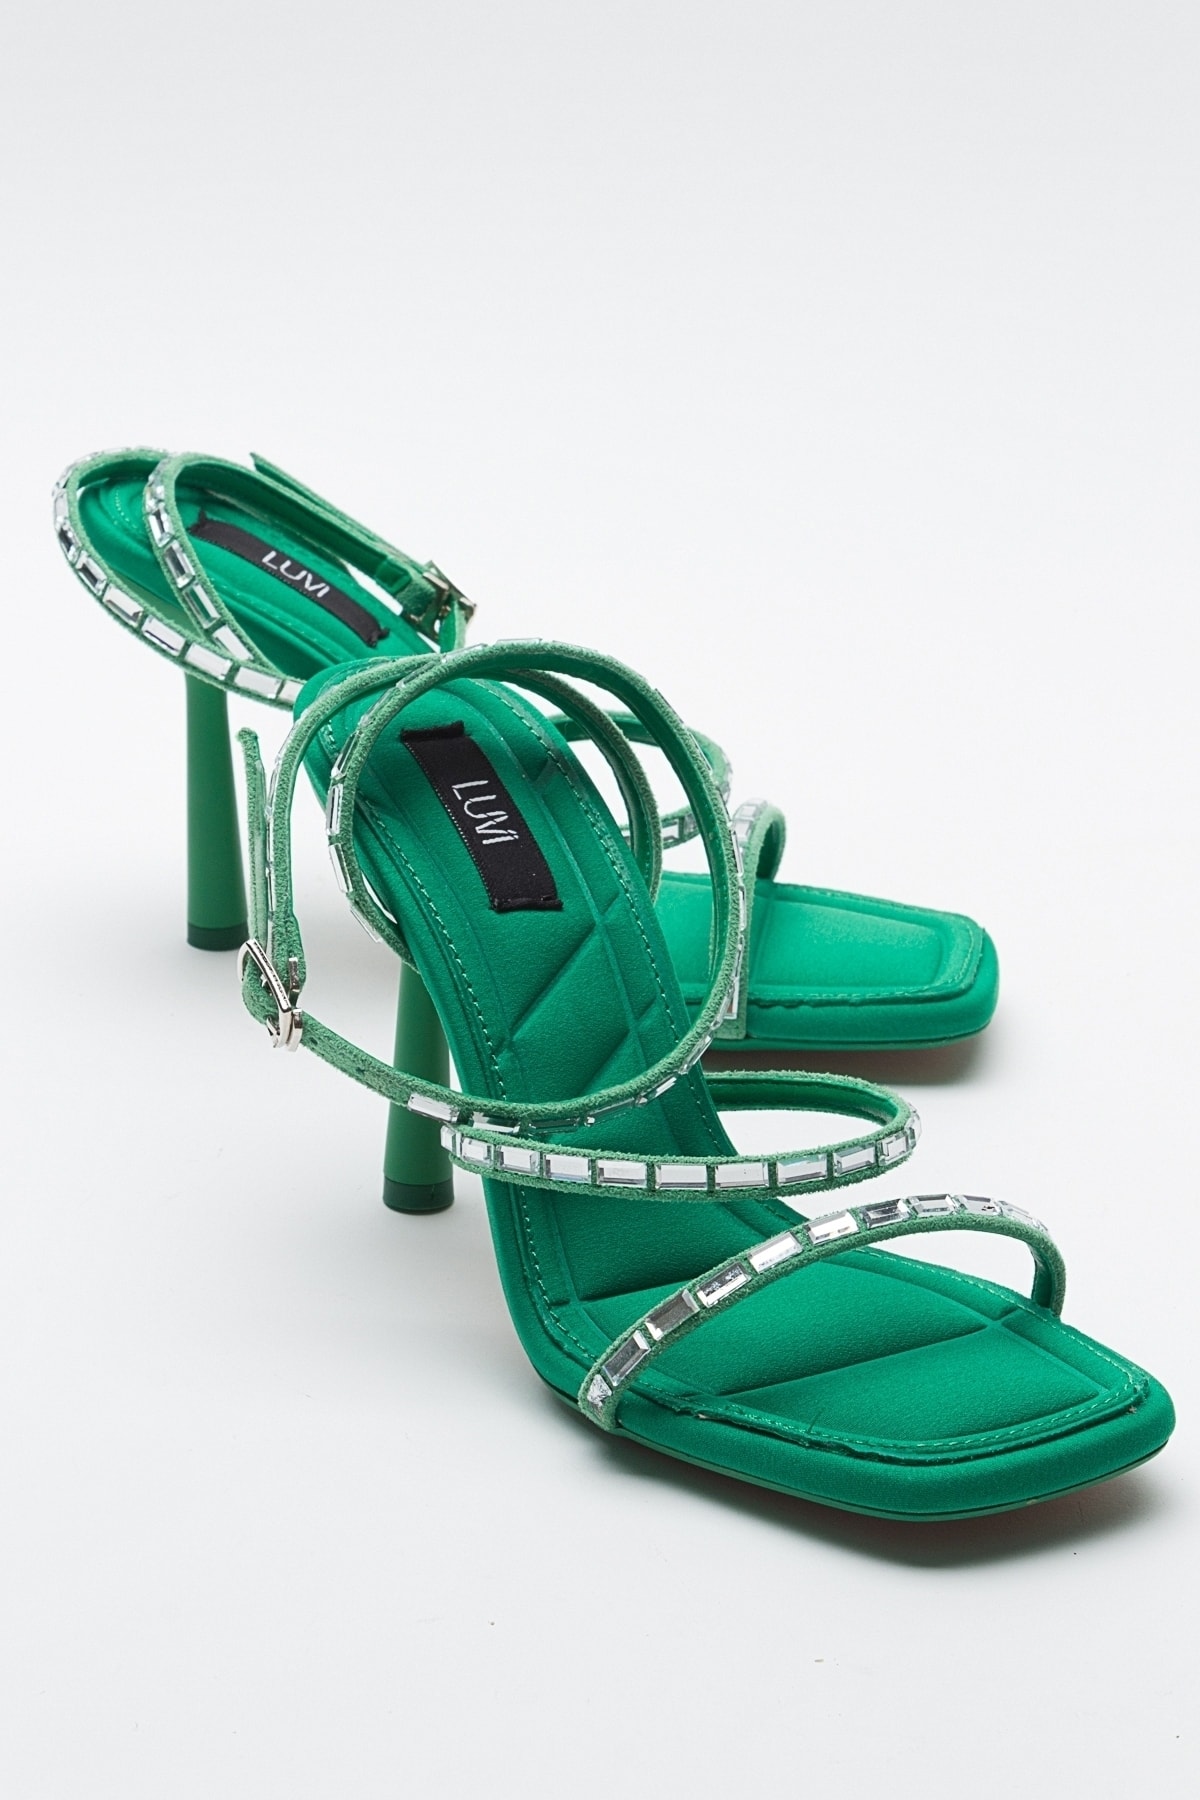 LuviShoes ANJE Women's Green Heeled Shoes